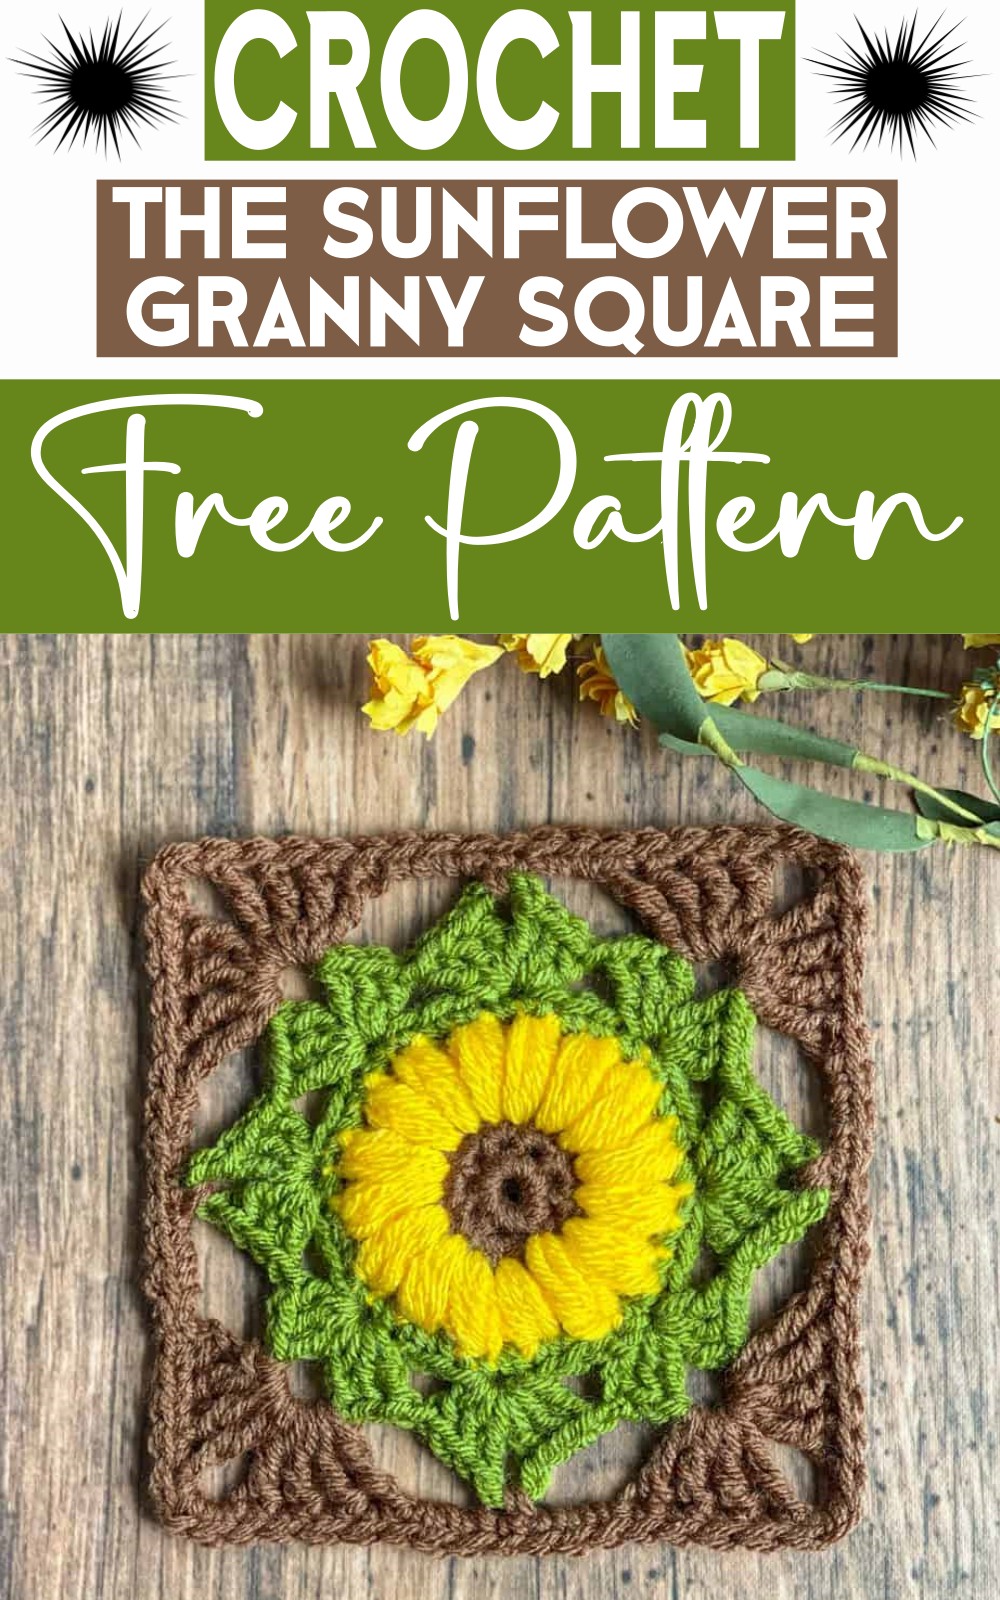 The Sunflower Granny Square